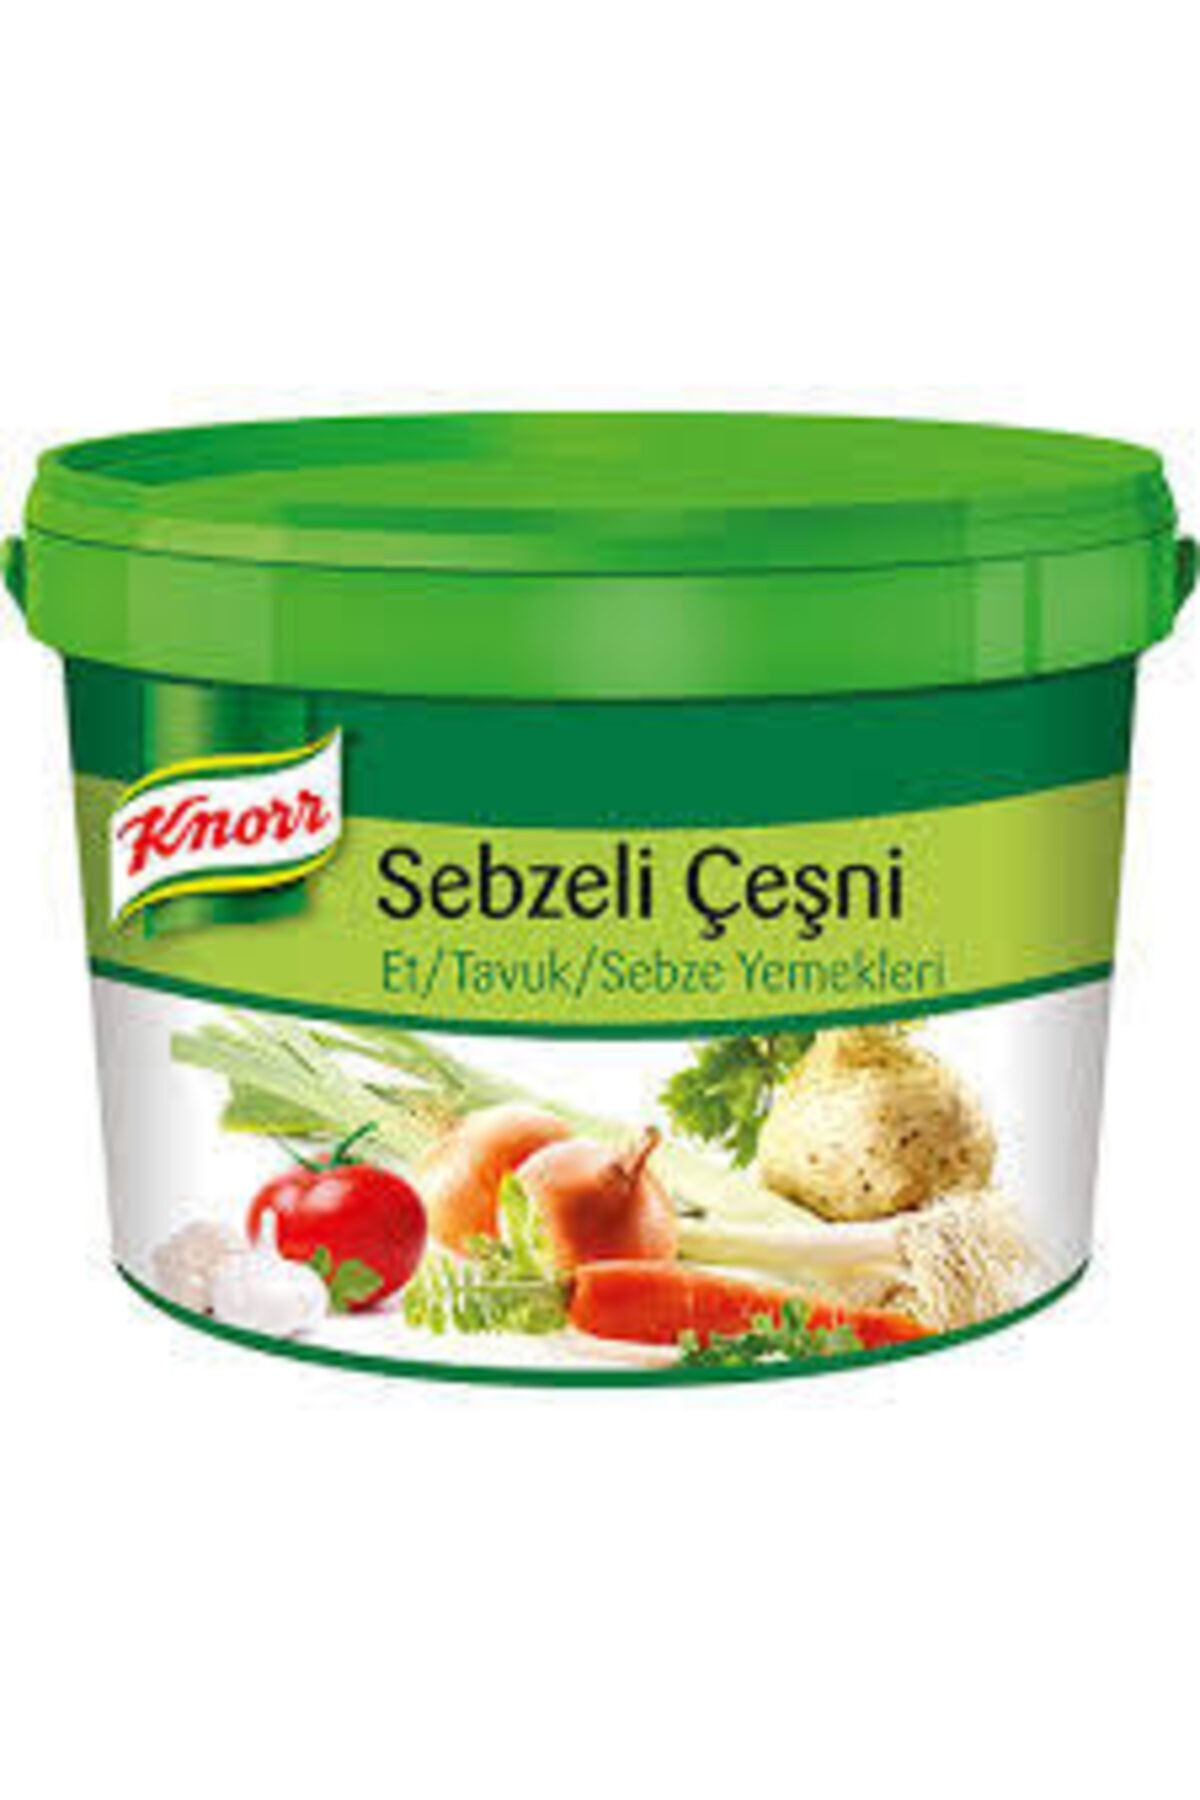 Knorr Sebzeli Çeşni 5 kg